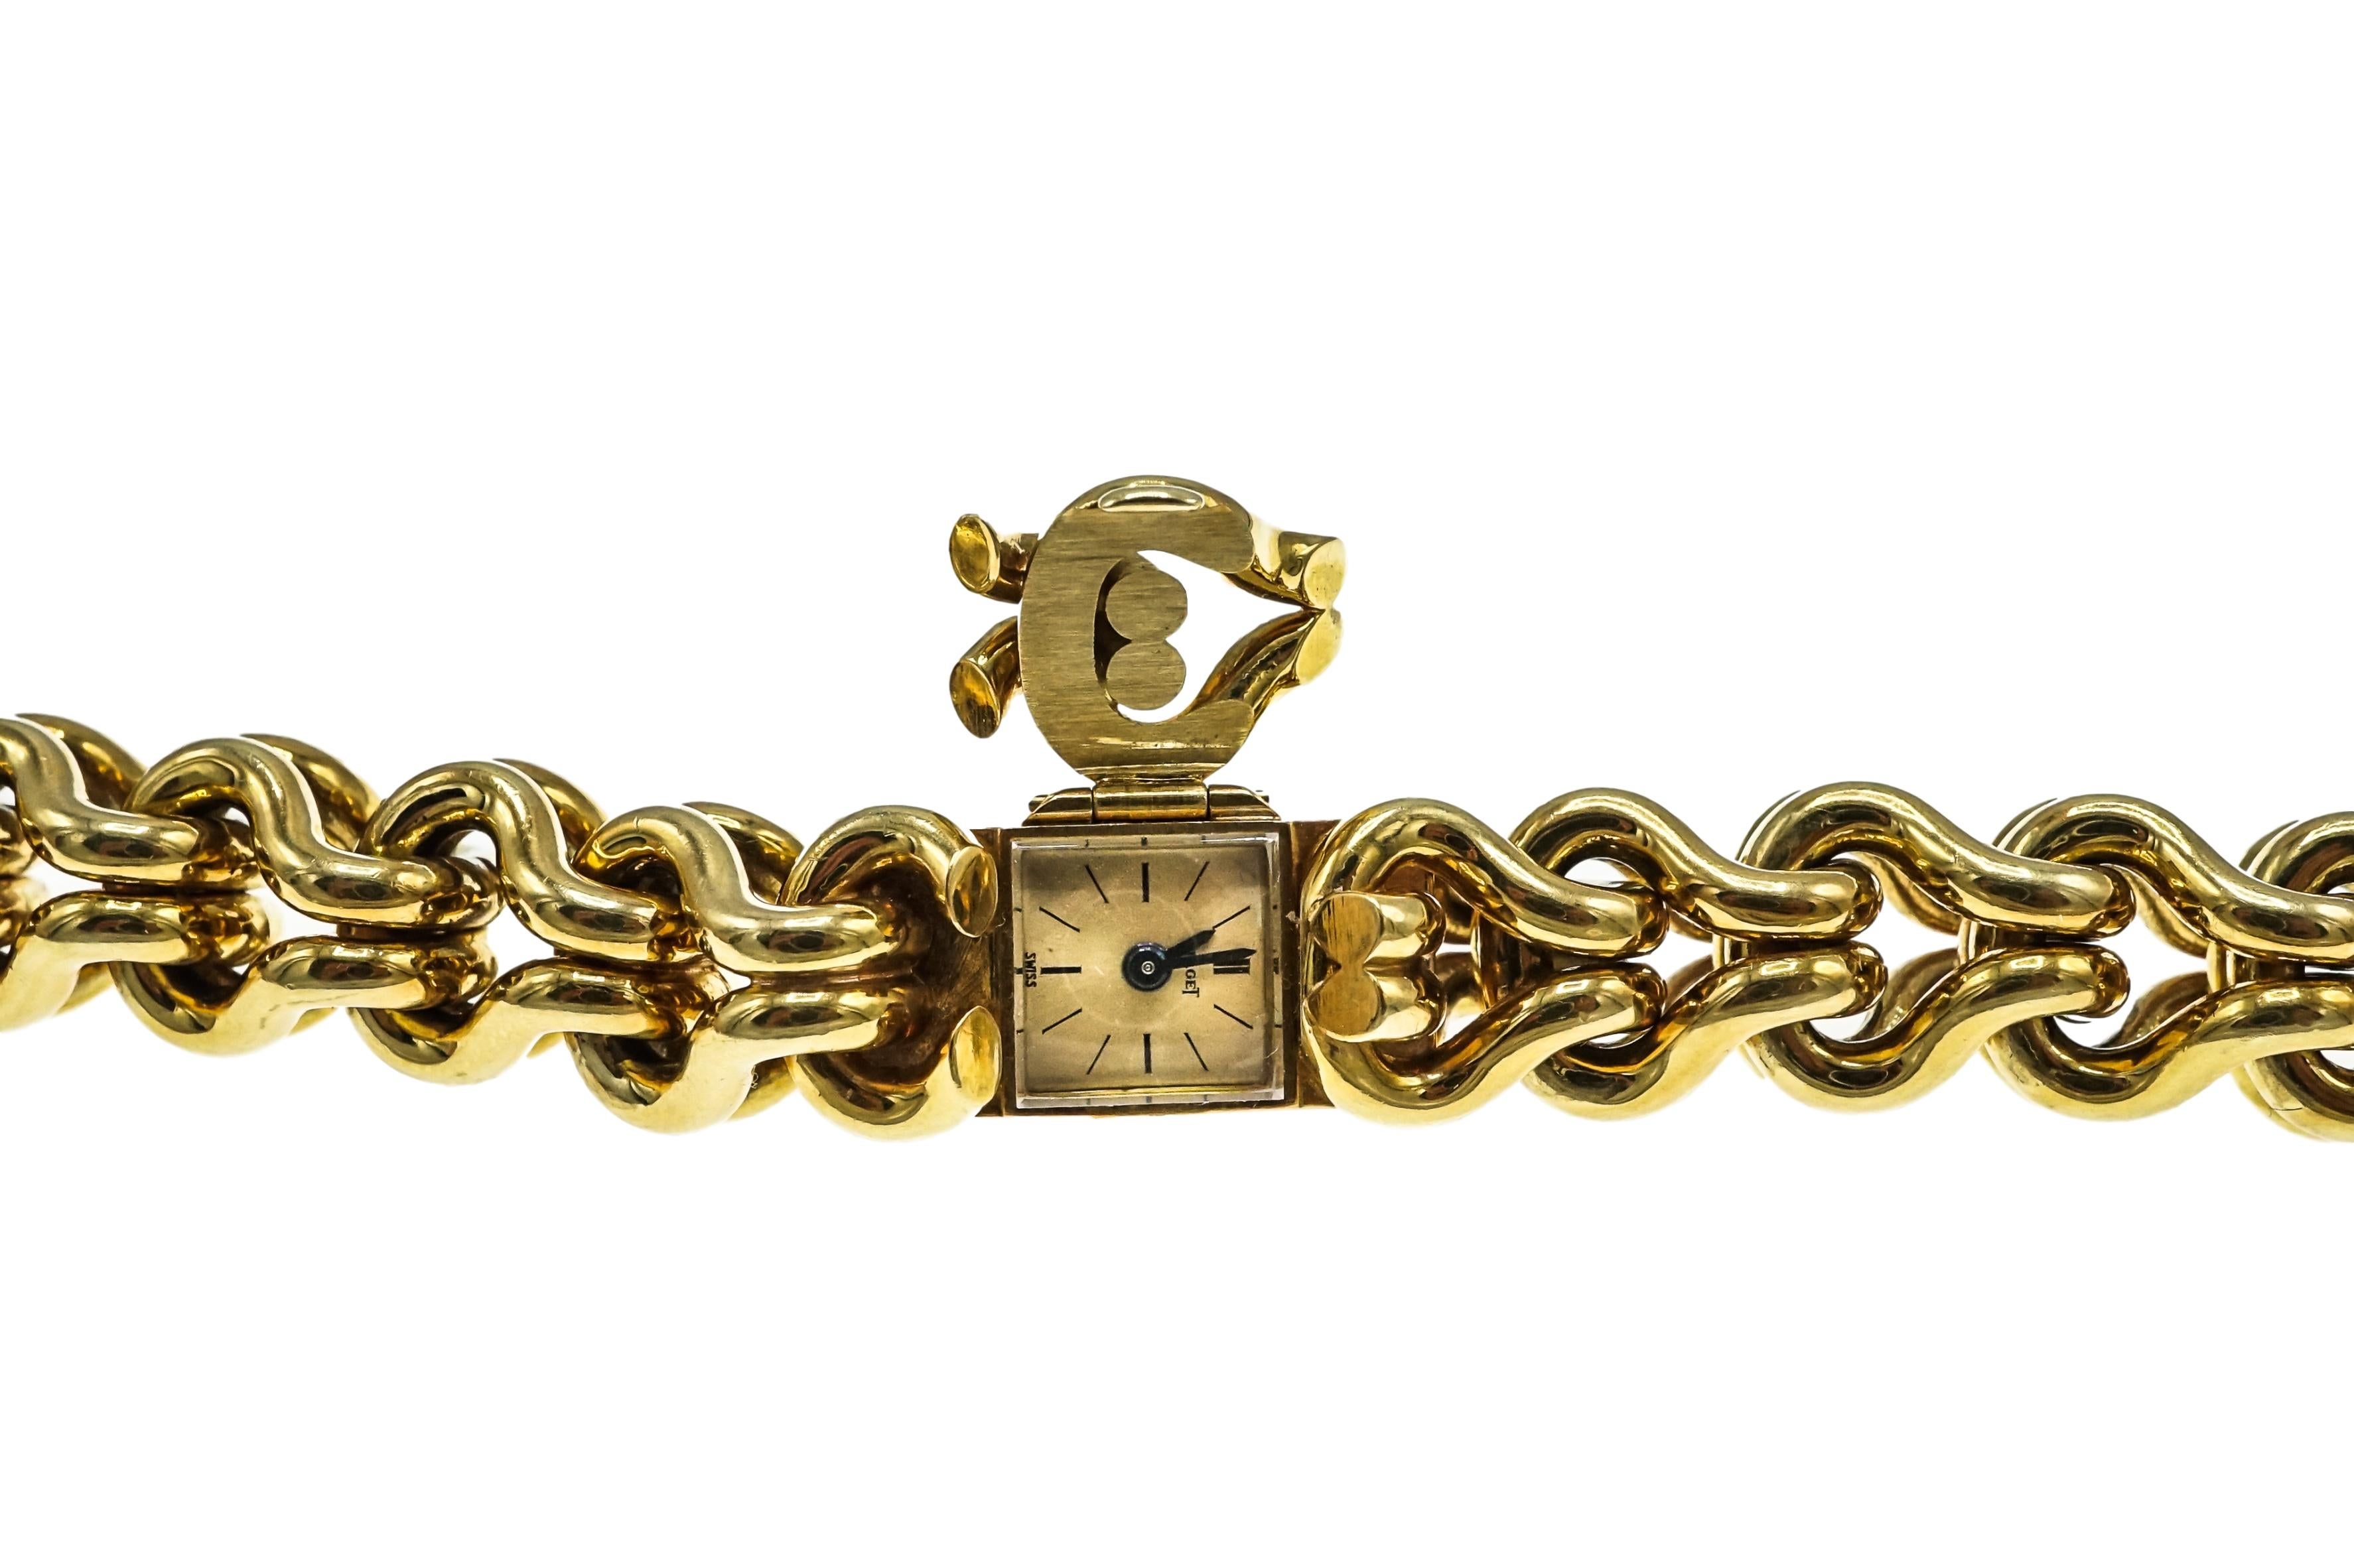 18k gold 1940s Piaget watch bracelet, featuring backwind manual wind movement. Bracelet is 7.5